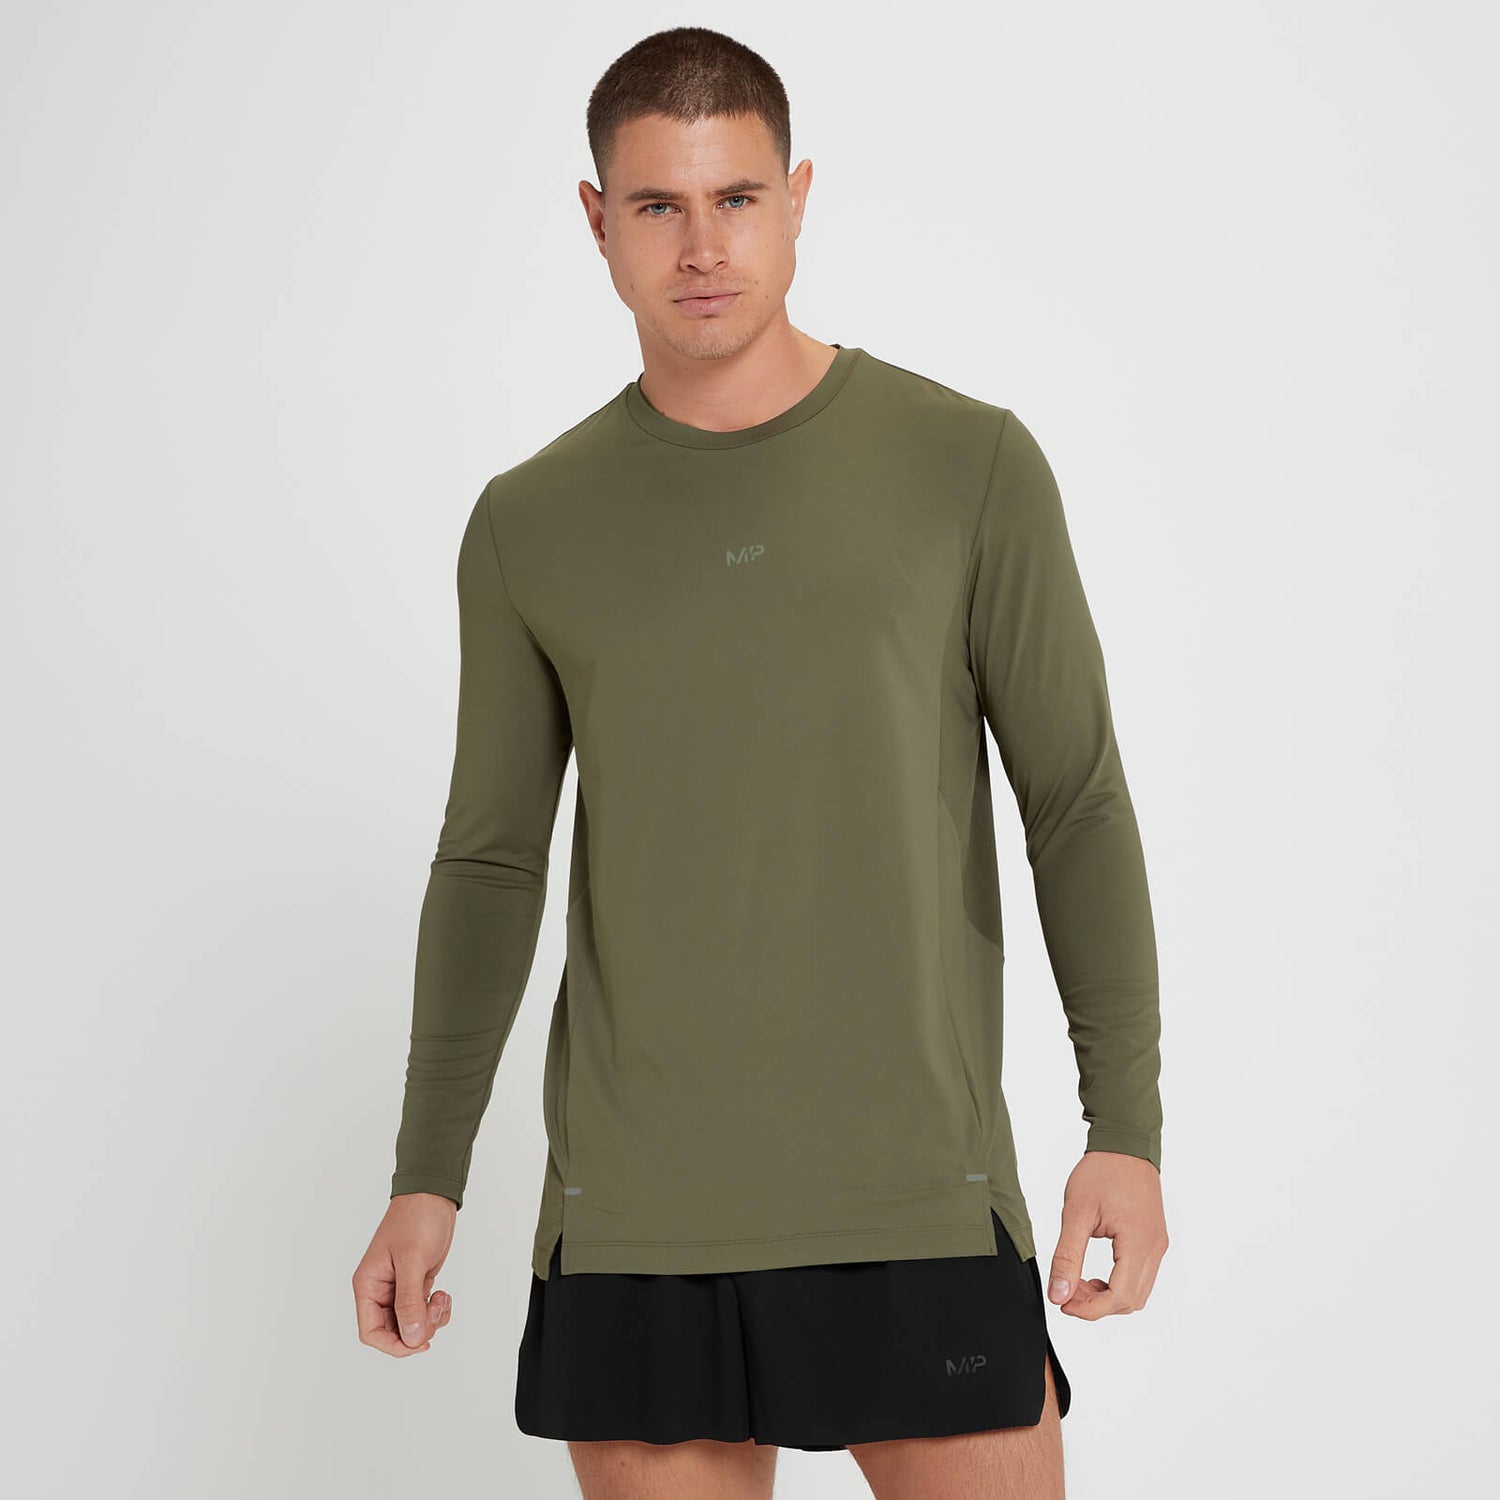 Camiseta de manga larga Velocity Ultra para hombre de MP - Verde militar - L